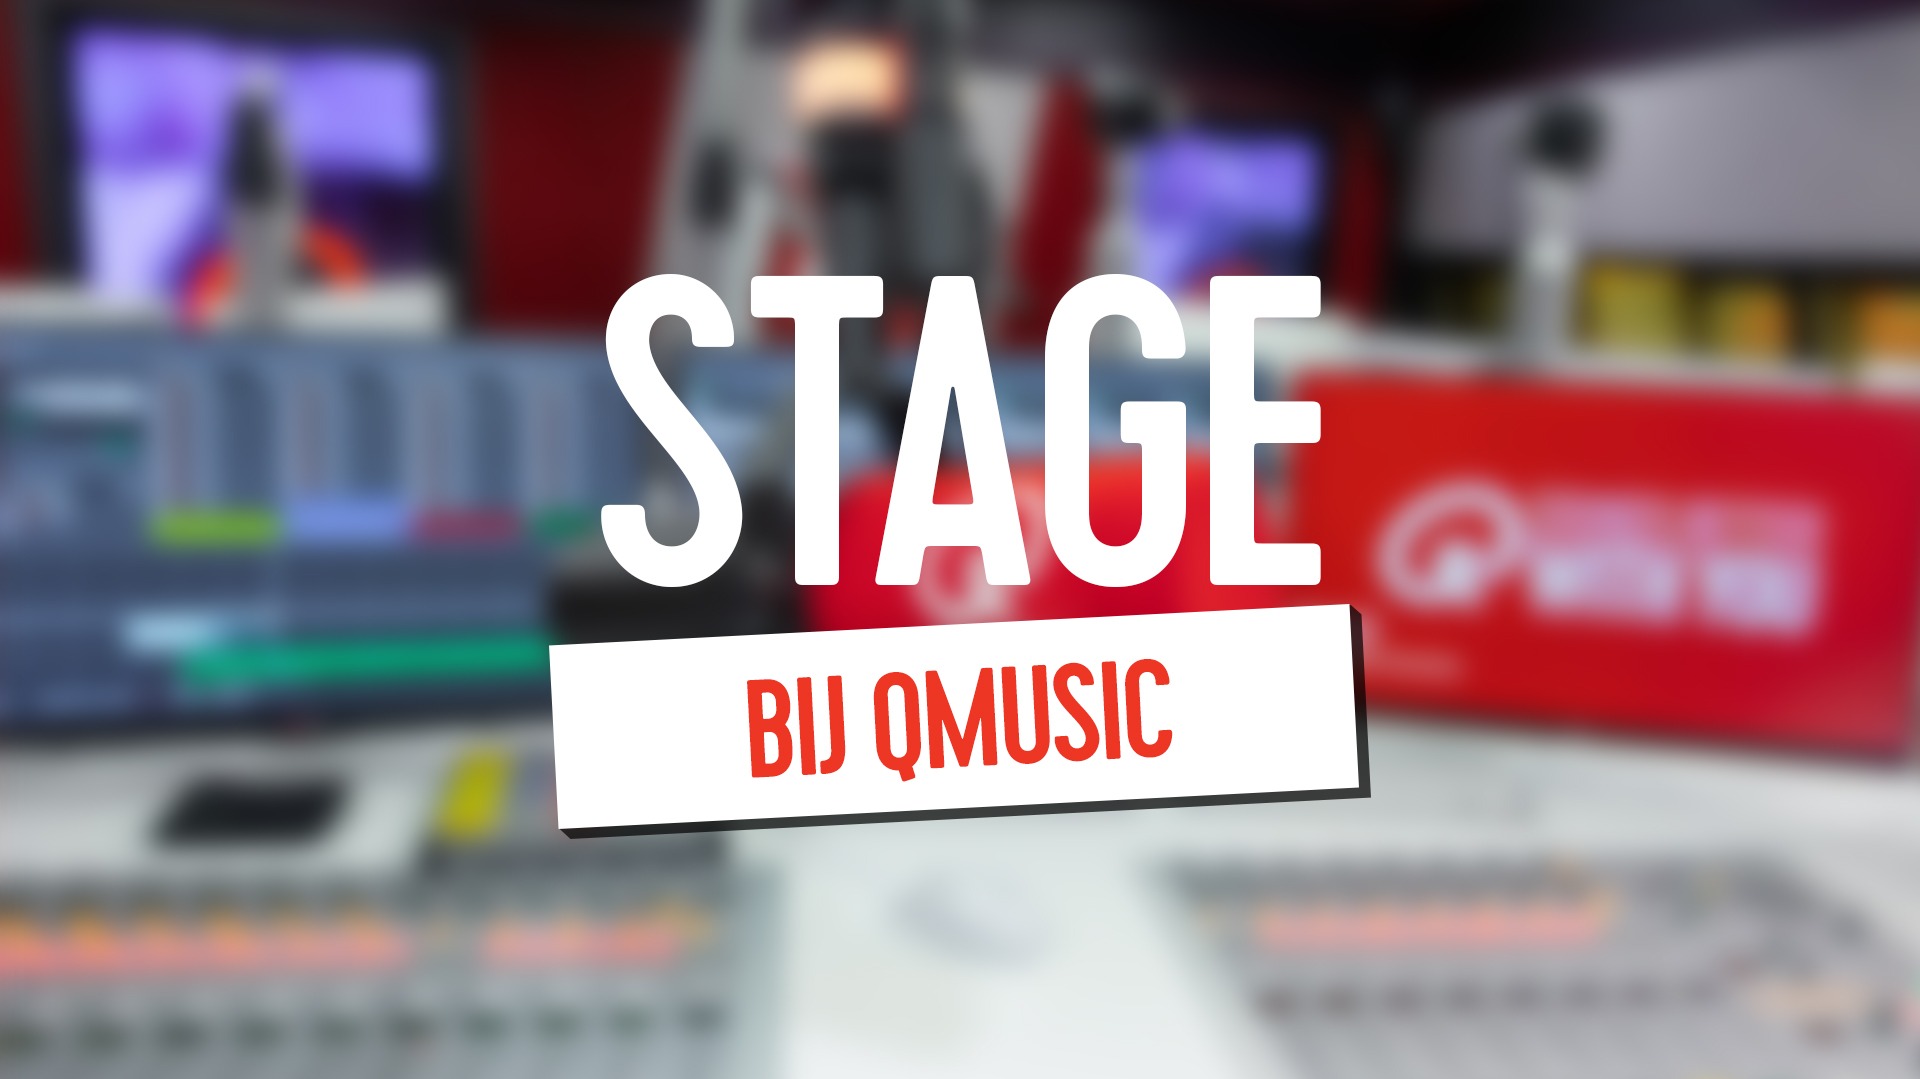 Qmusic stage v01